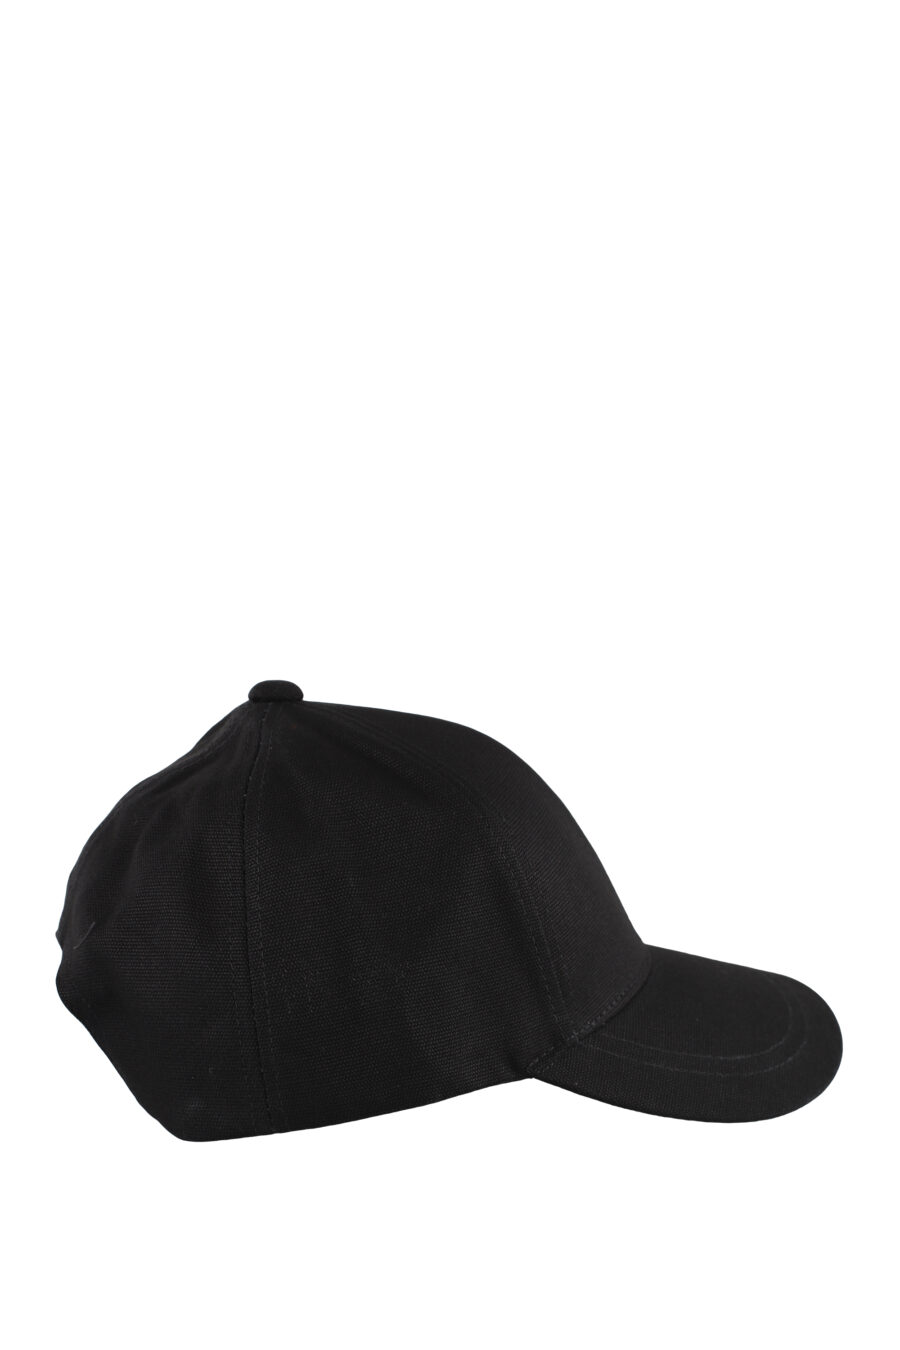 Gorra negra con logo "lux identity" dorado - IMG 5173